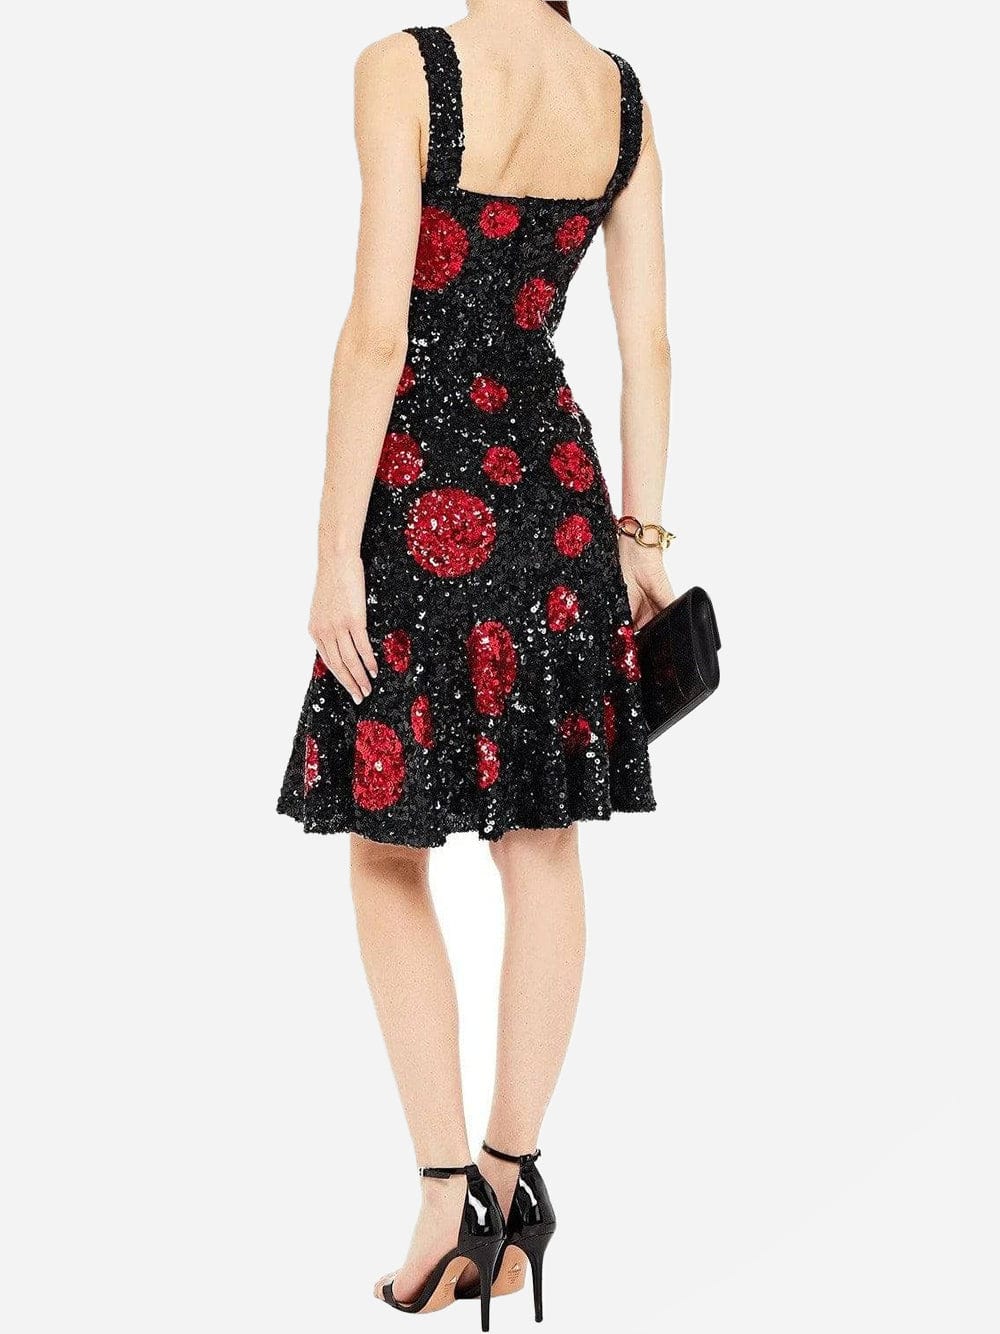 Dolce & Gabbana Sequined Polka-Dot Dress